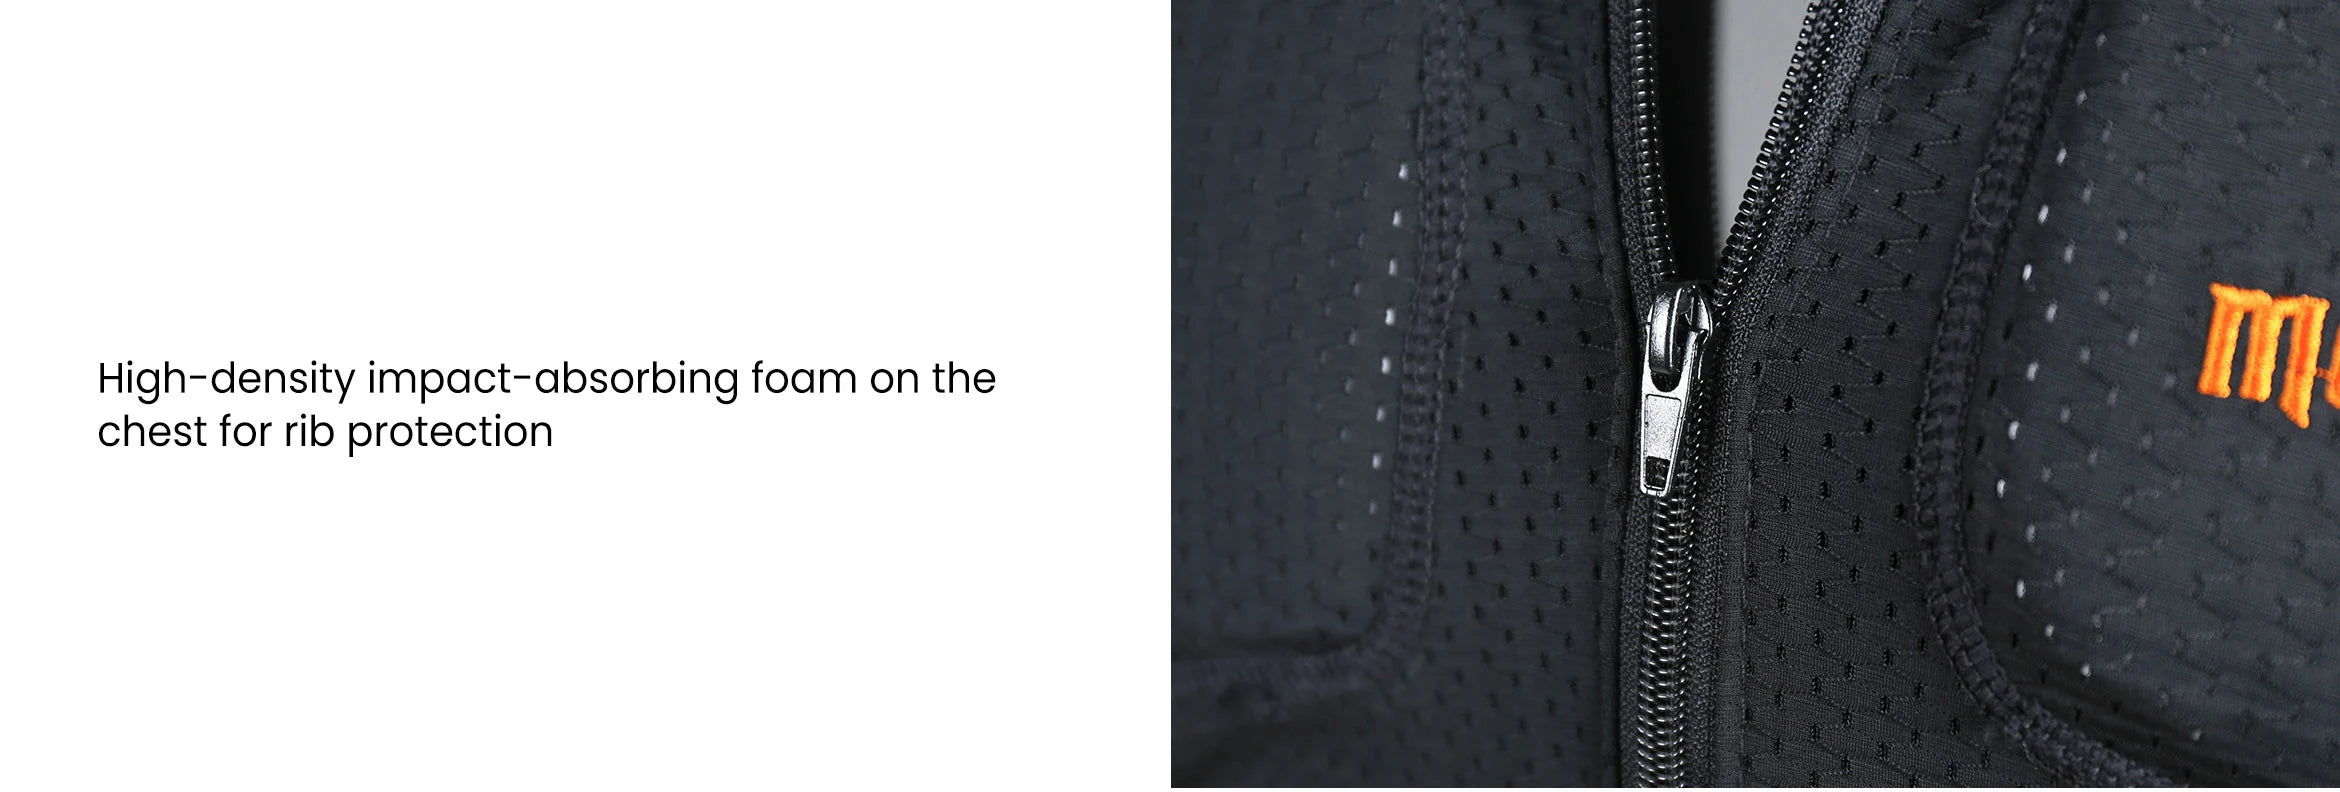 10. Doorek Ski Armor Jacket for Kids - High-density impact-absorbing foam on the chest for rib protection